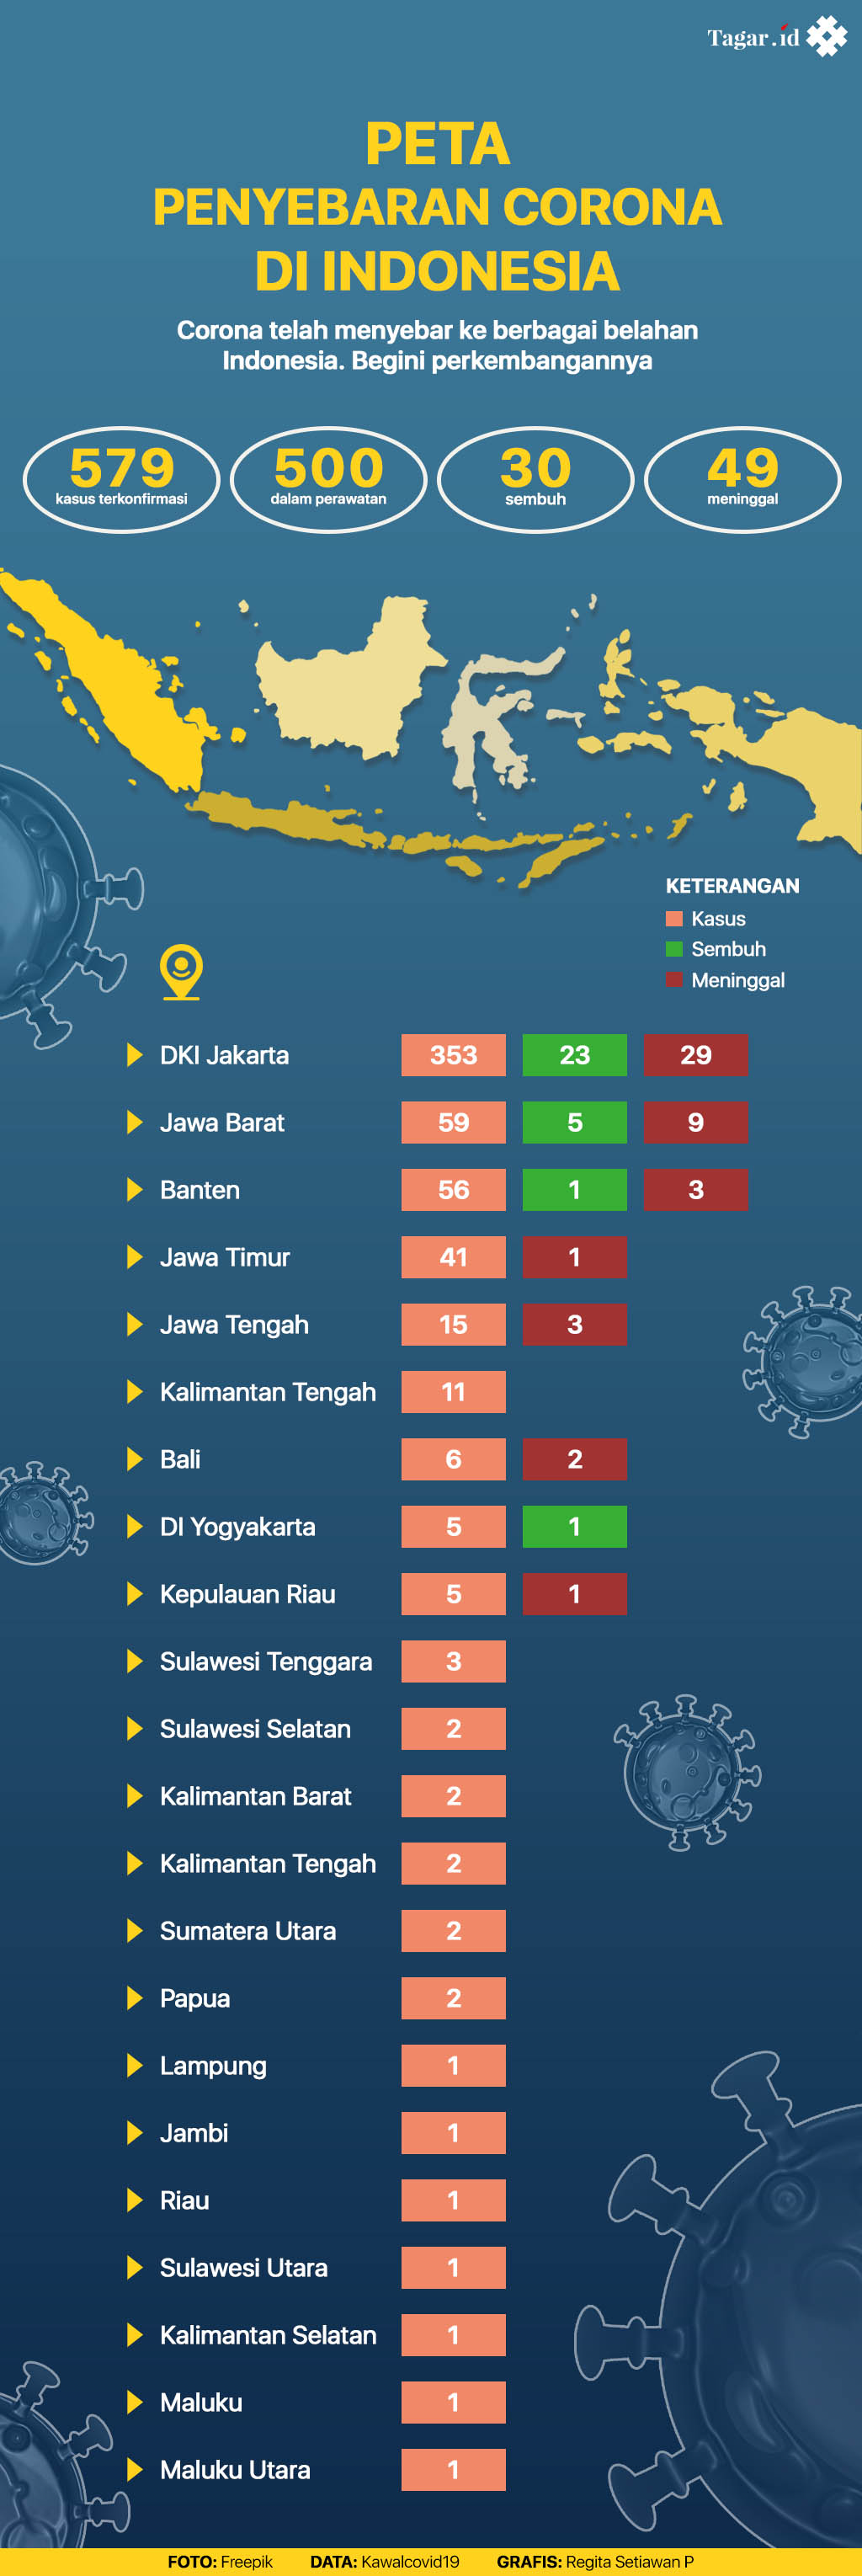 Infografis: Peta Penyebaran Corona di Indonesia